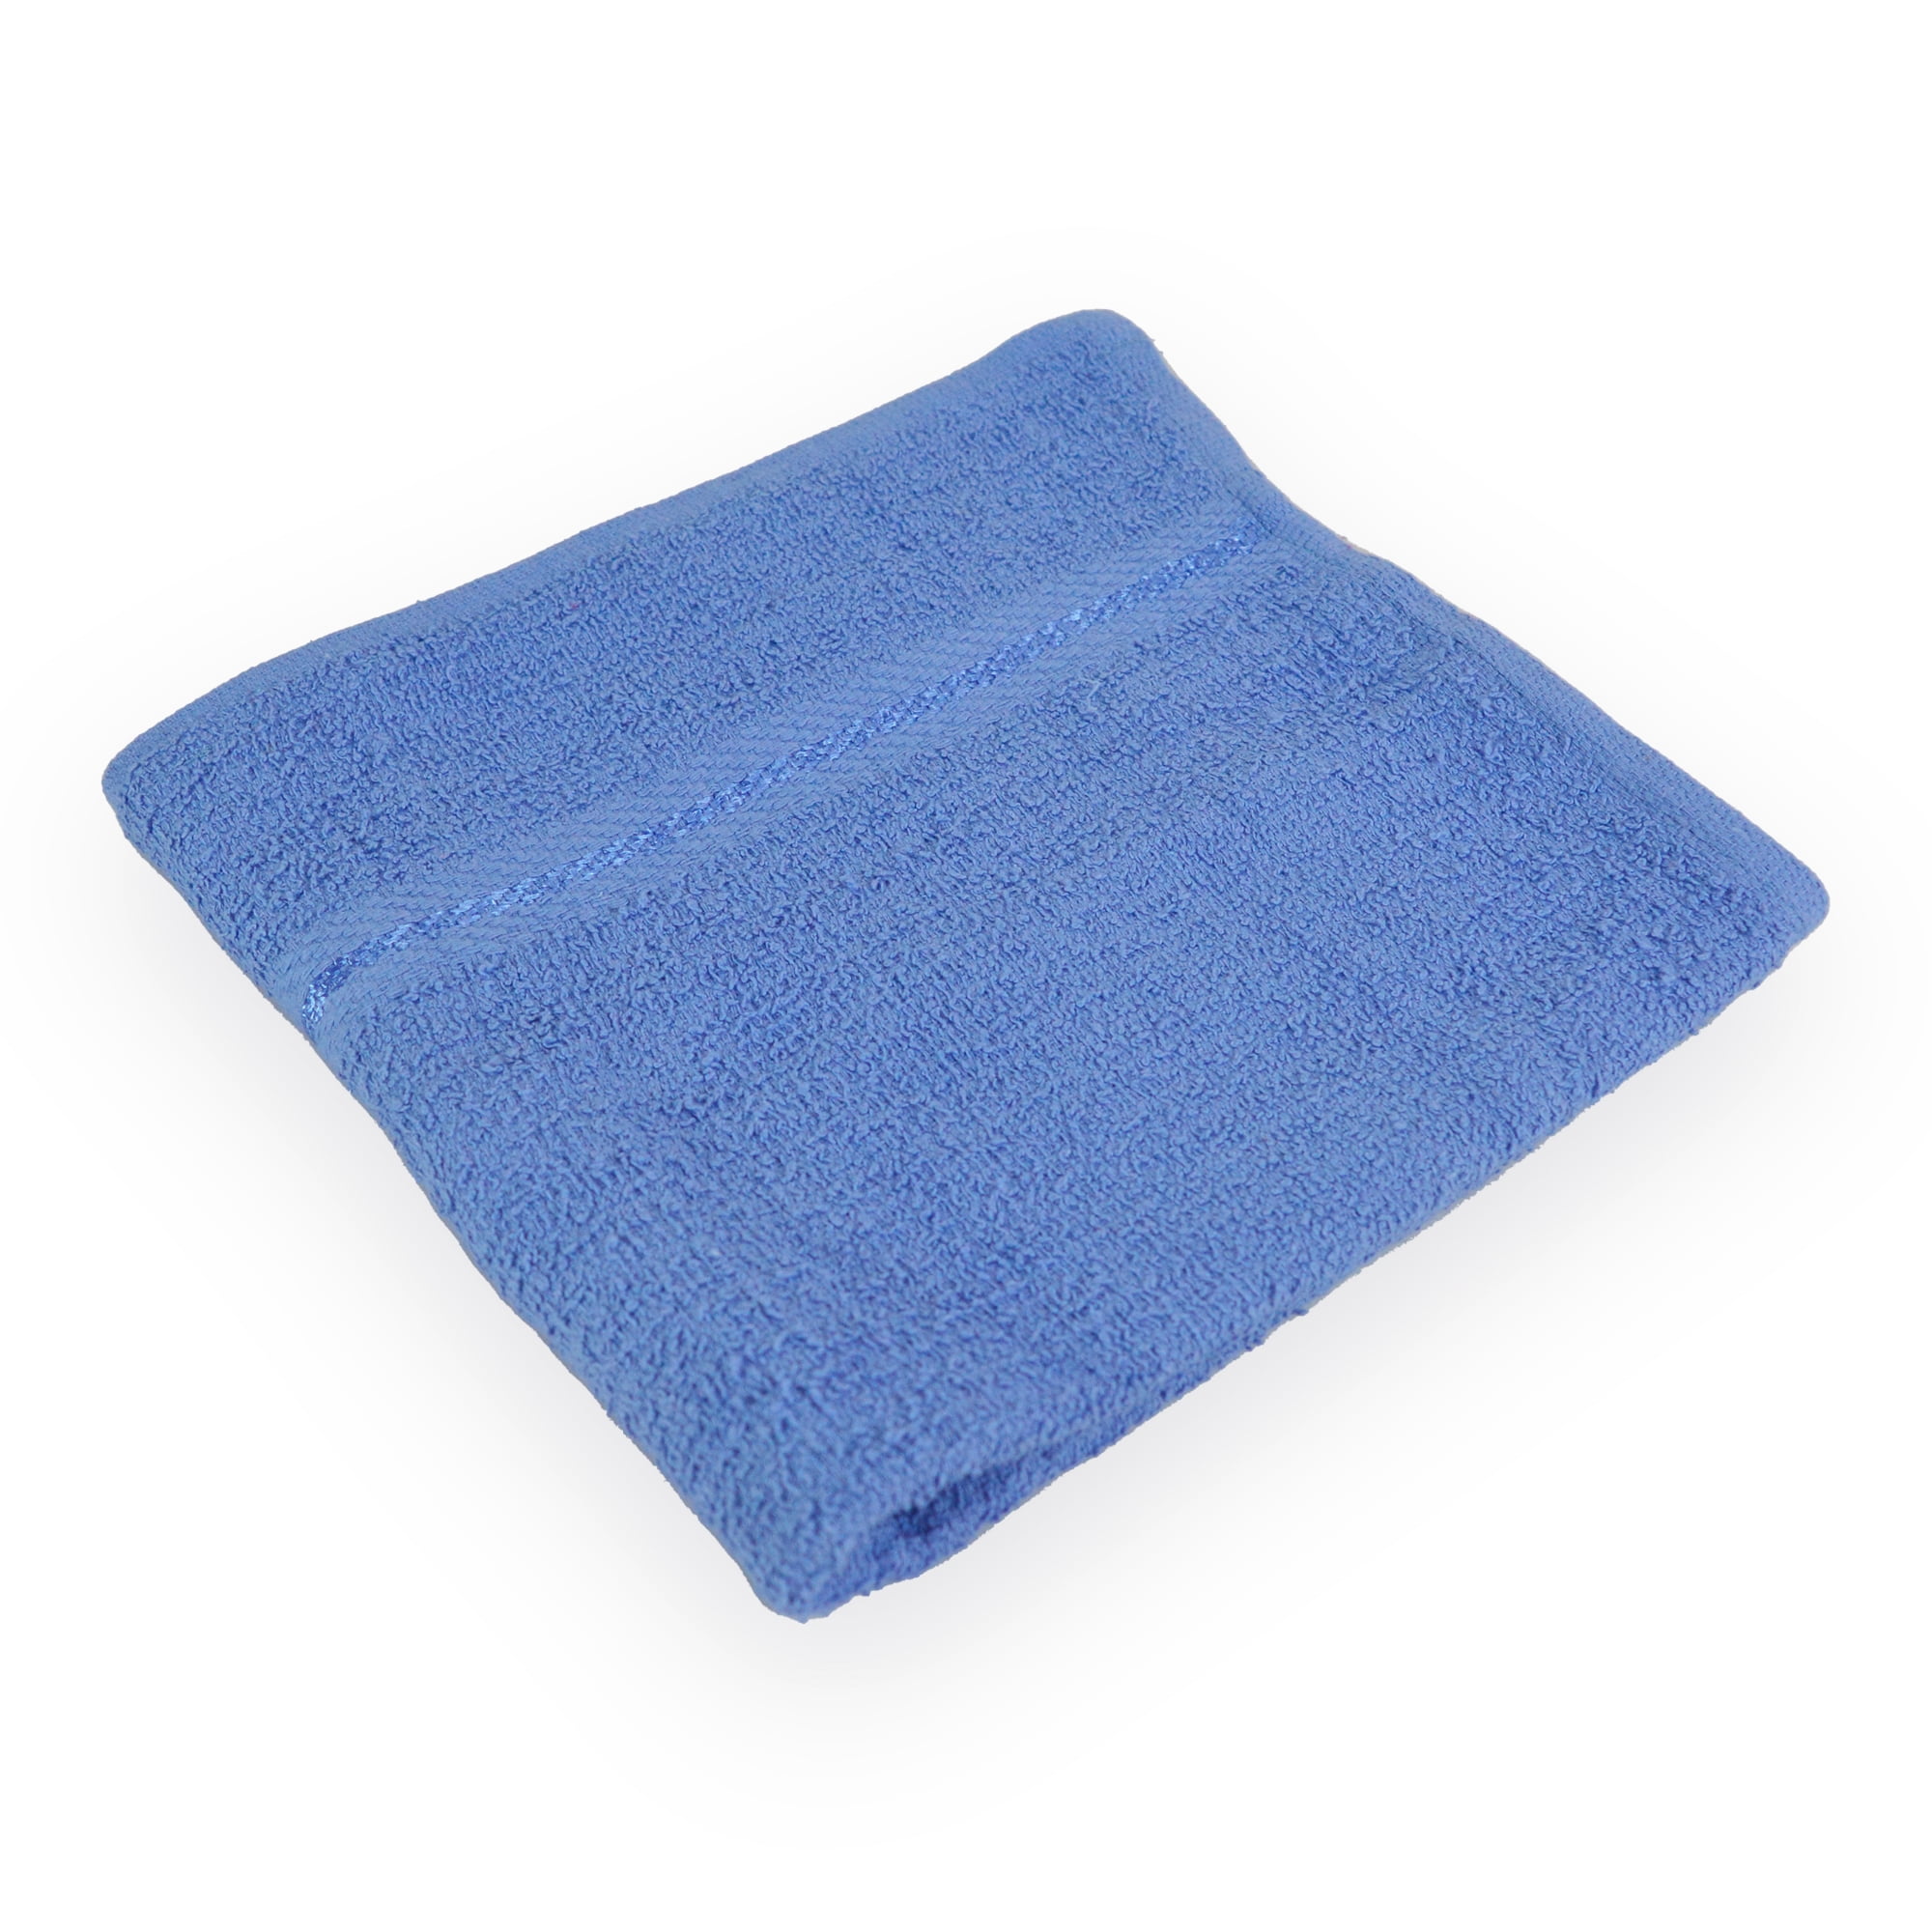 Standard Bath Towel Cotton 20x40 (Inches) Light Blue